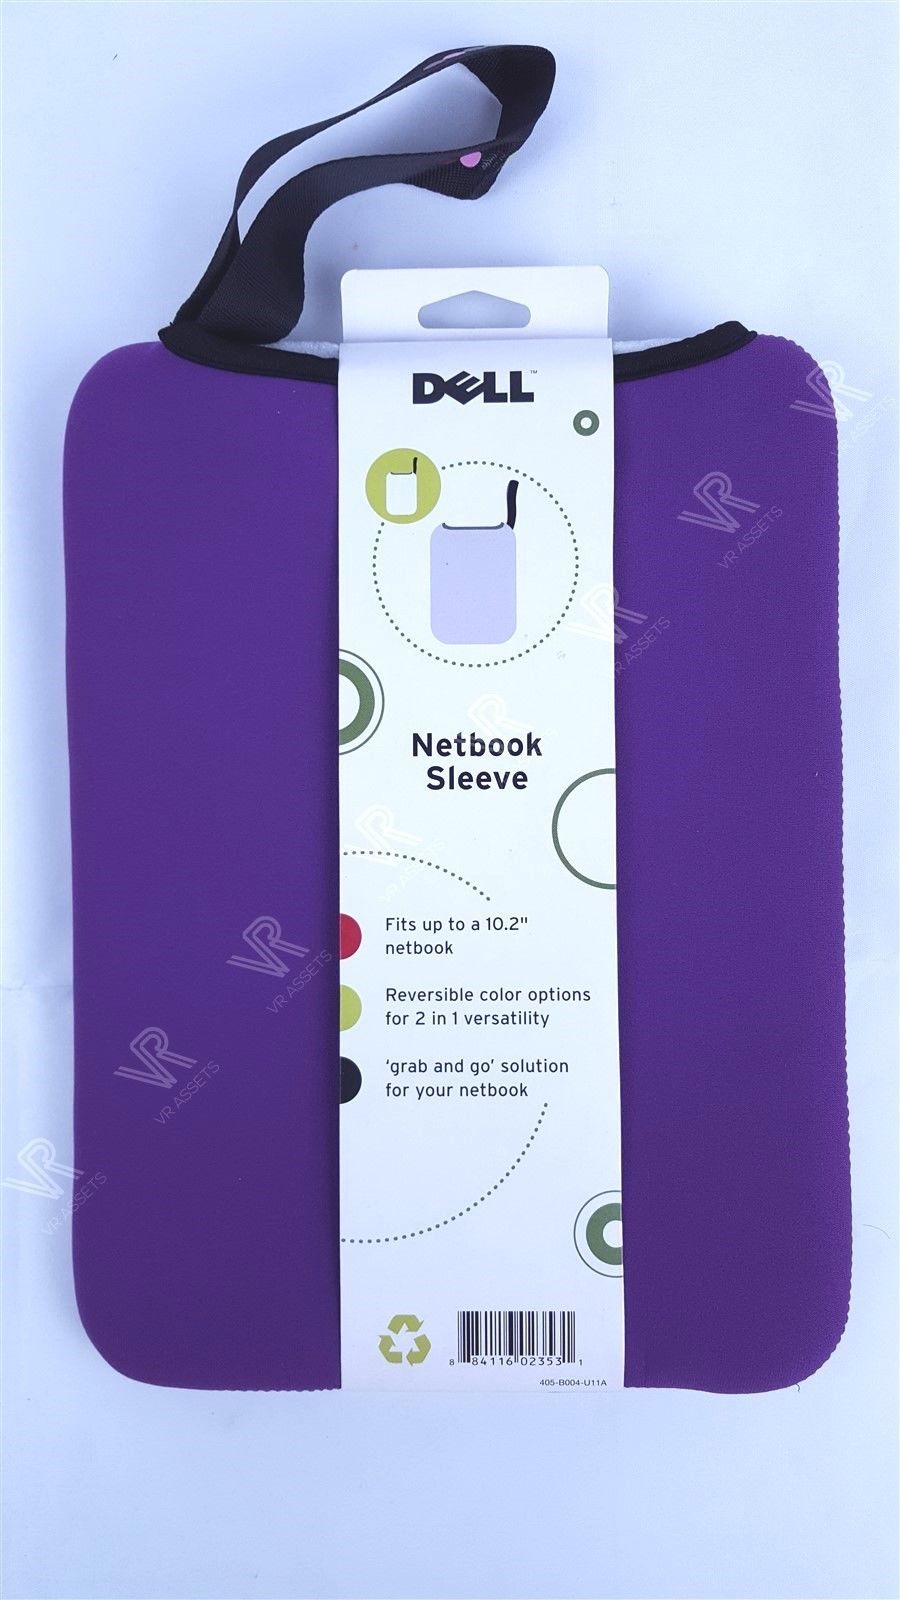 Dell 5Dot 10.2" Reversible Netbook Sleeve Bag Black / Purple 9HK9W 09HK9W NEW